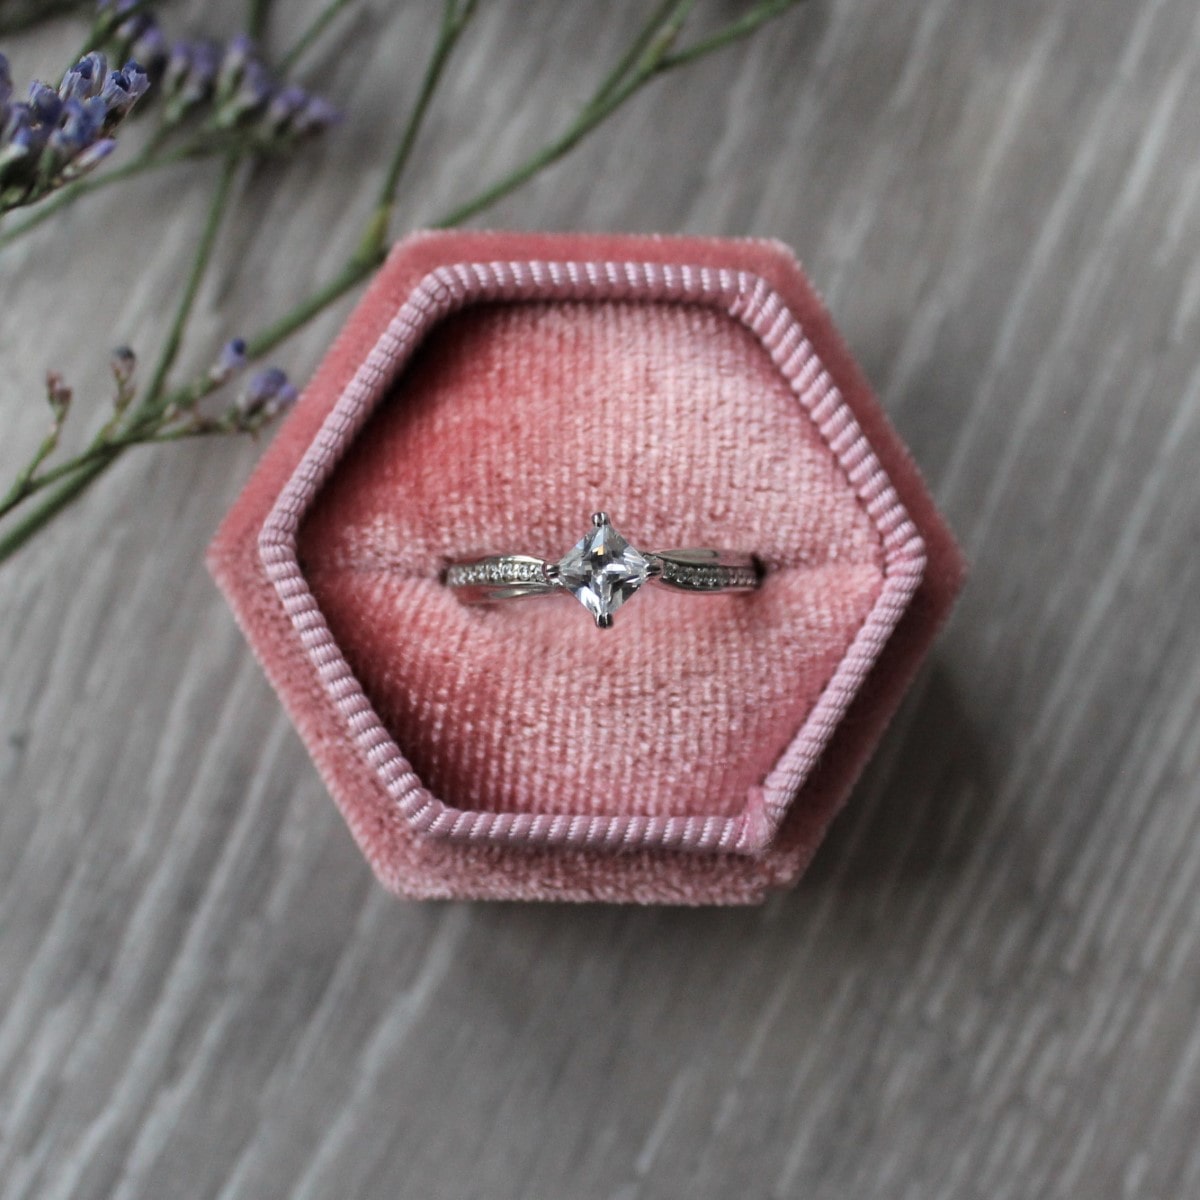 Princess Cut Diamond Engagement Ring with Grain Set Shoulders